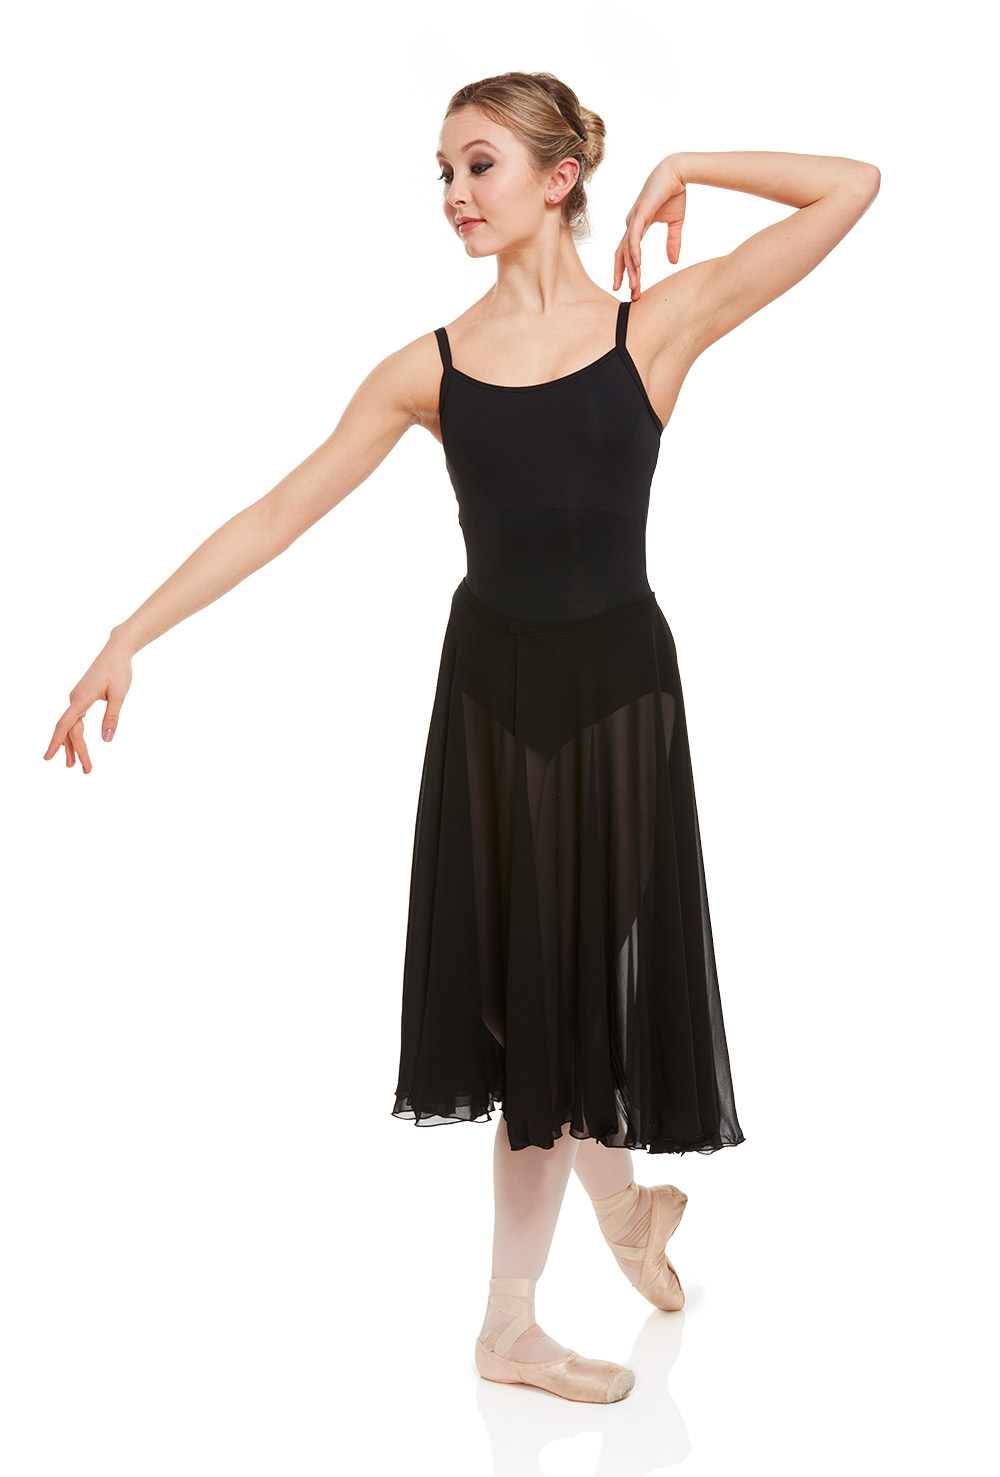 Capezio Full Circle Skirt 11151W - Porselli Dancewear